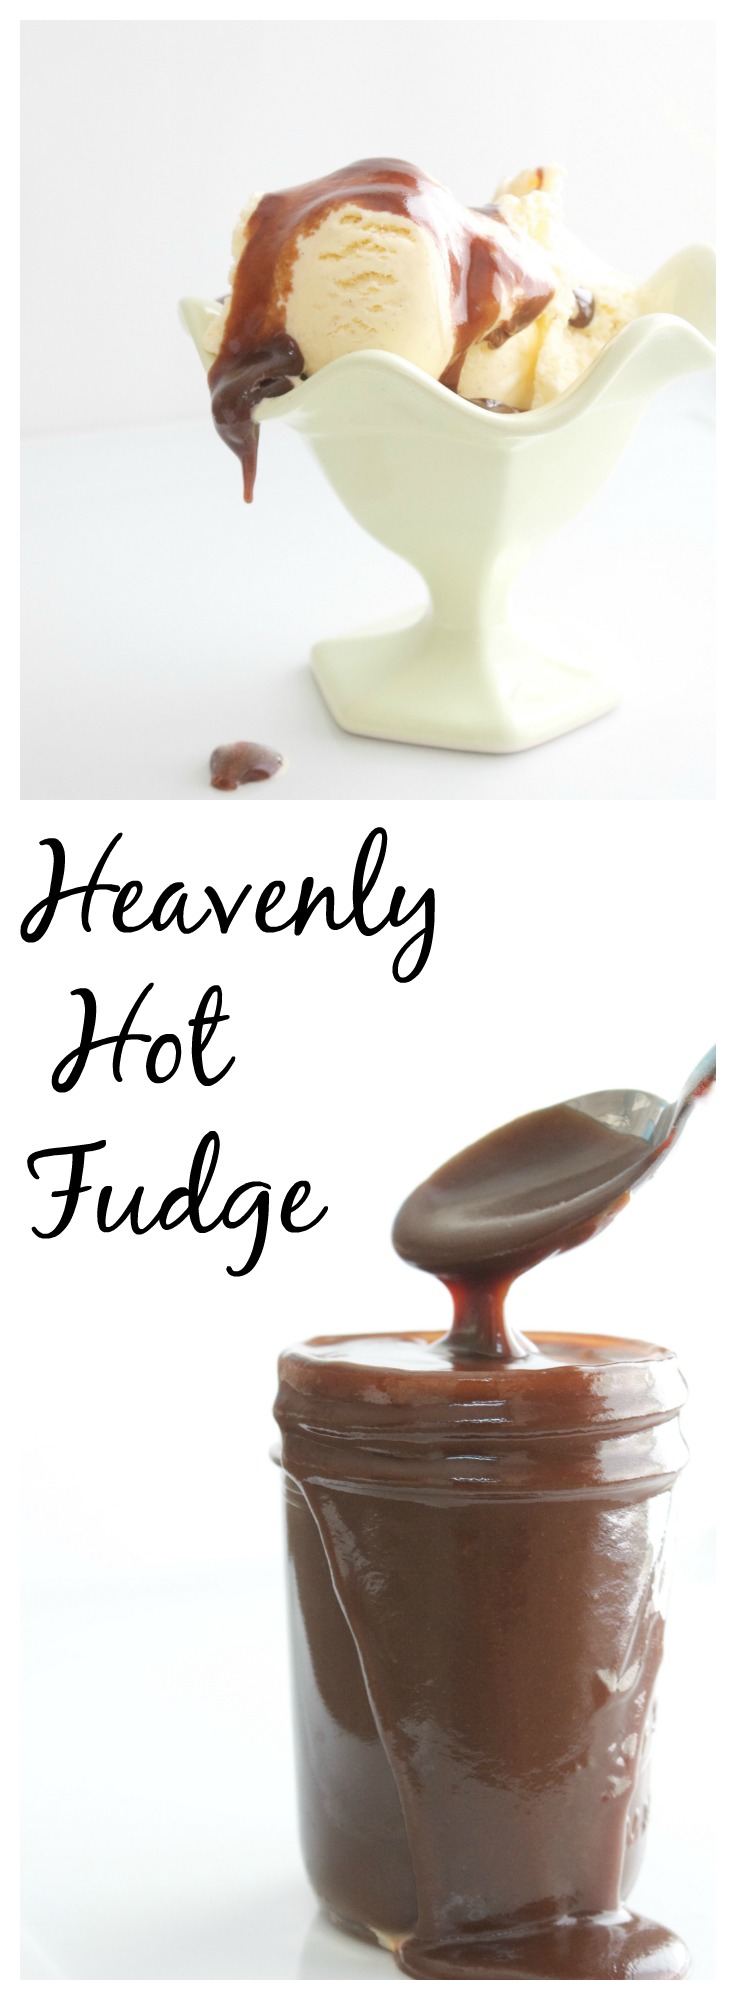 Heavenly Hot Fudge Collage